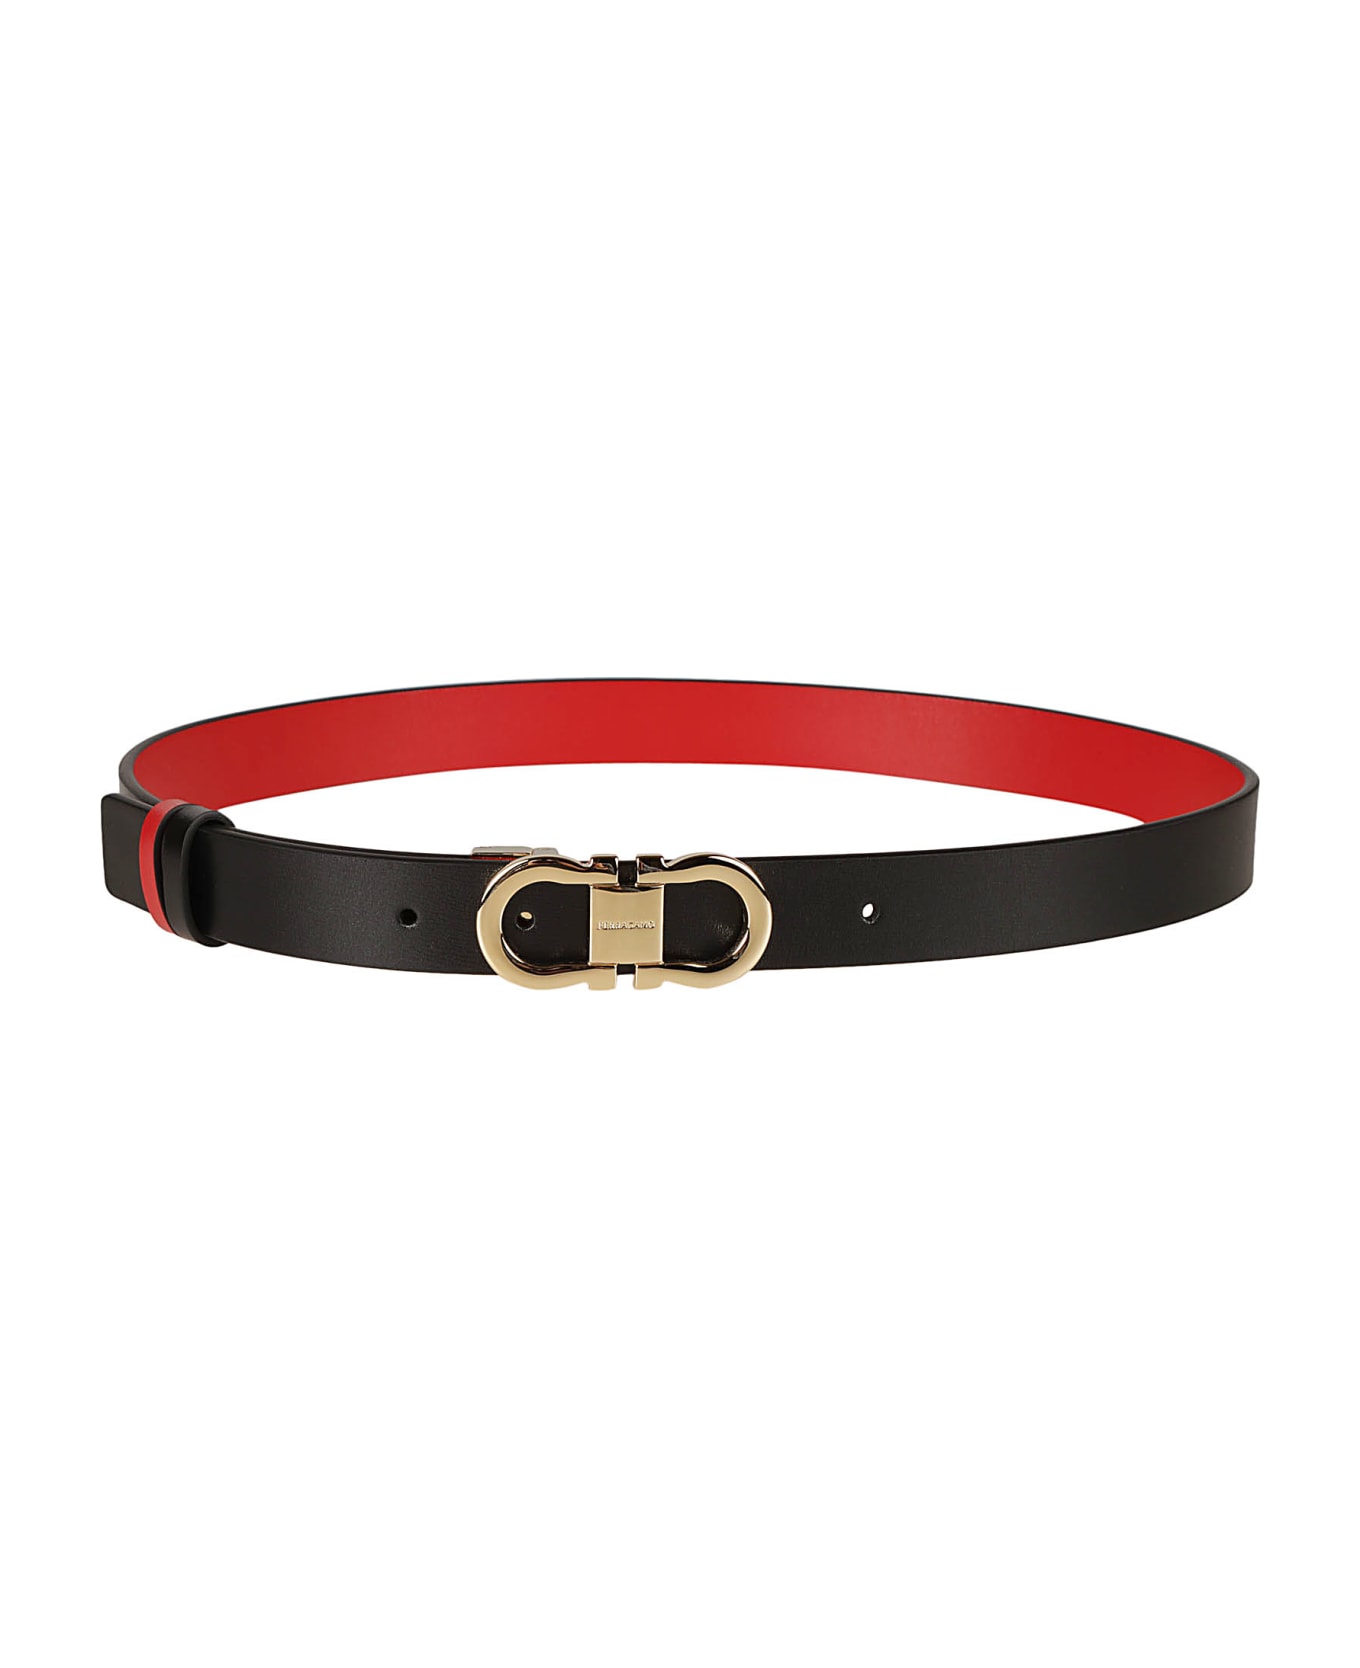 Ferragamo Double Gancini Buckled Belt - Black/Flame Red